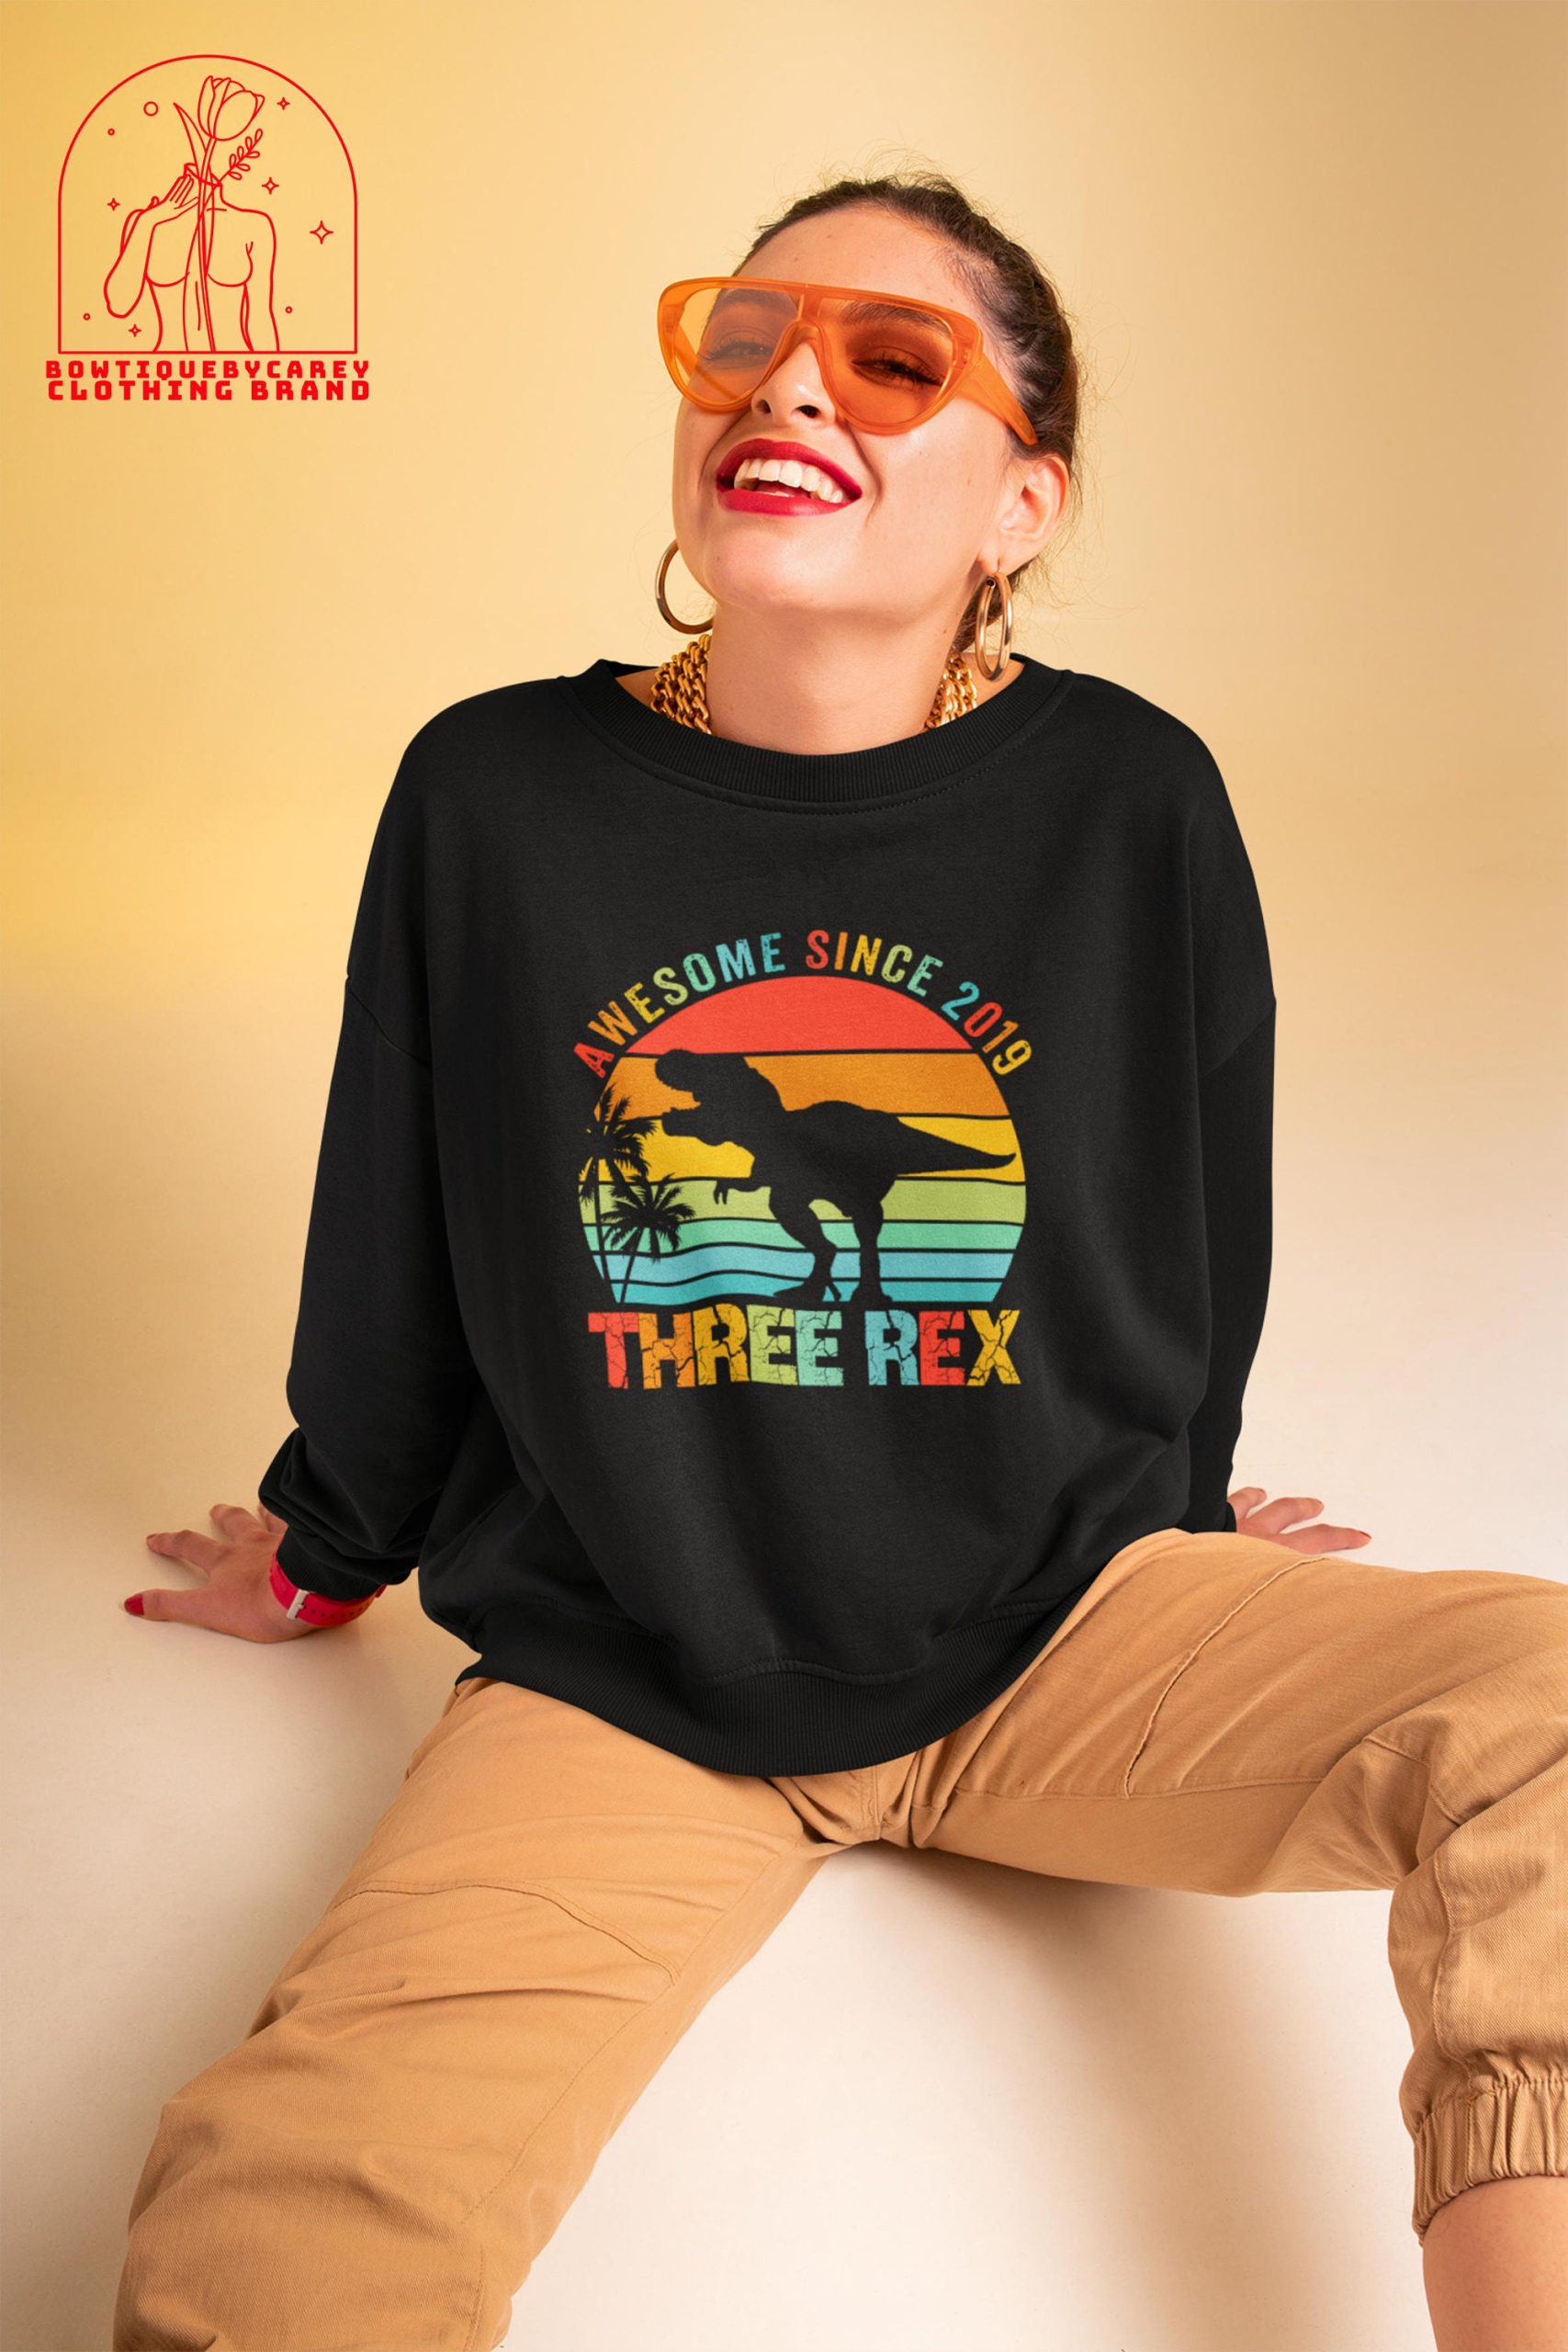 Awesome Since 2019 Three Rex Dinosaur T-Rex Jurassic Park Unisex T-Shirt